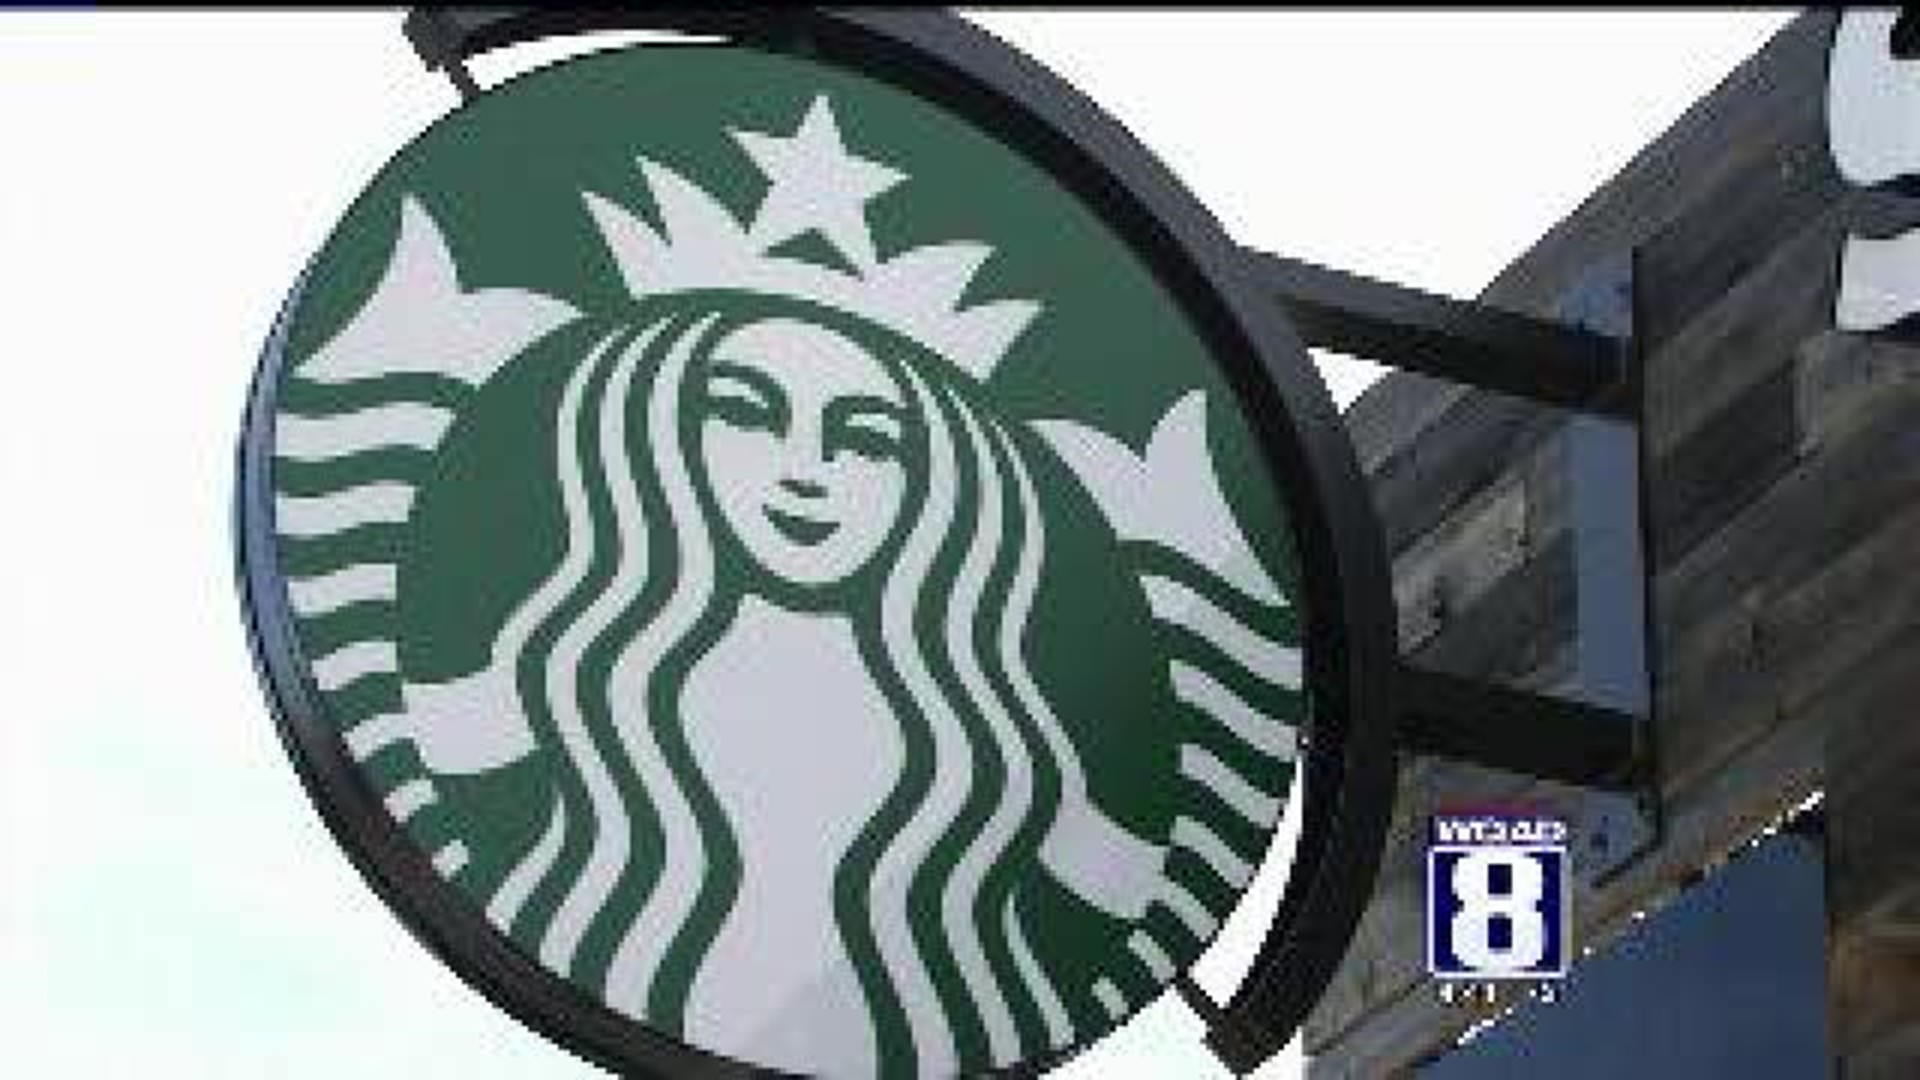 Starbucks enacts stricter smoking rules